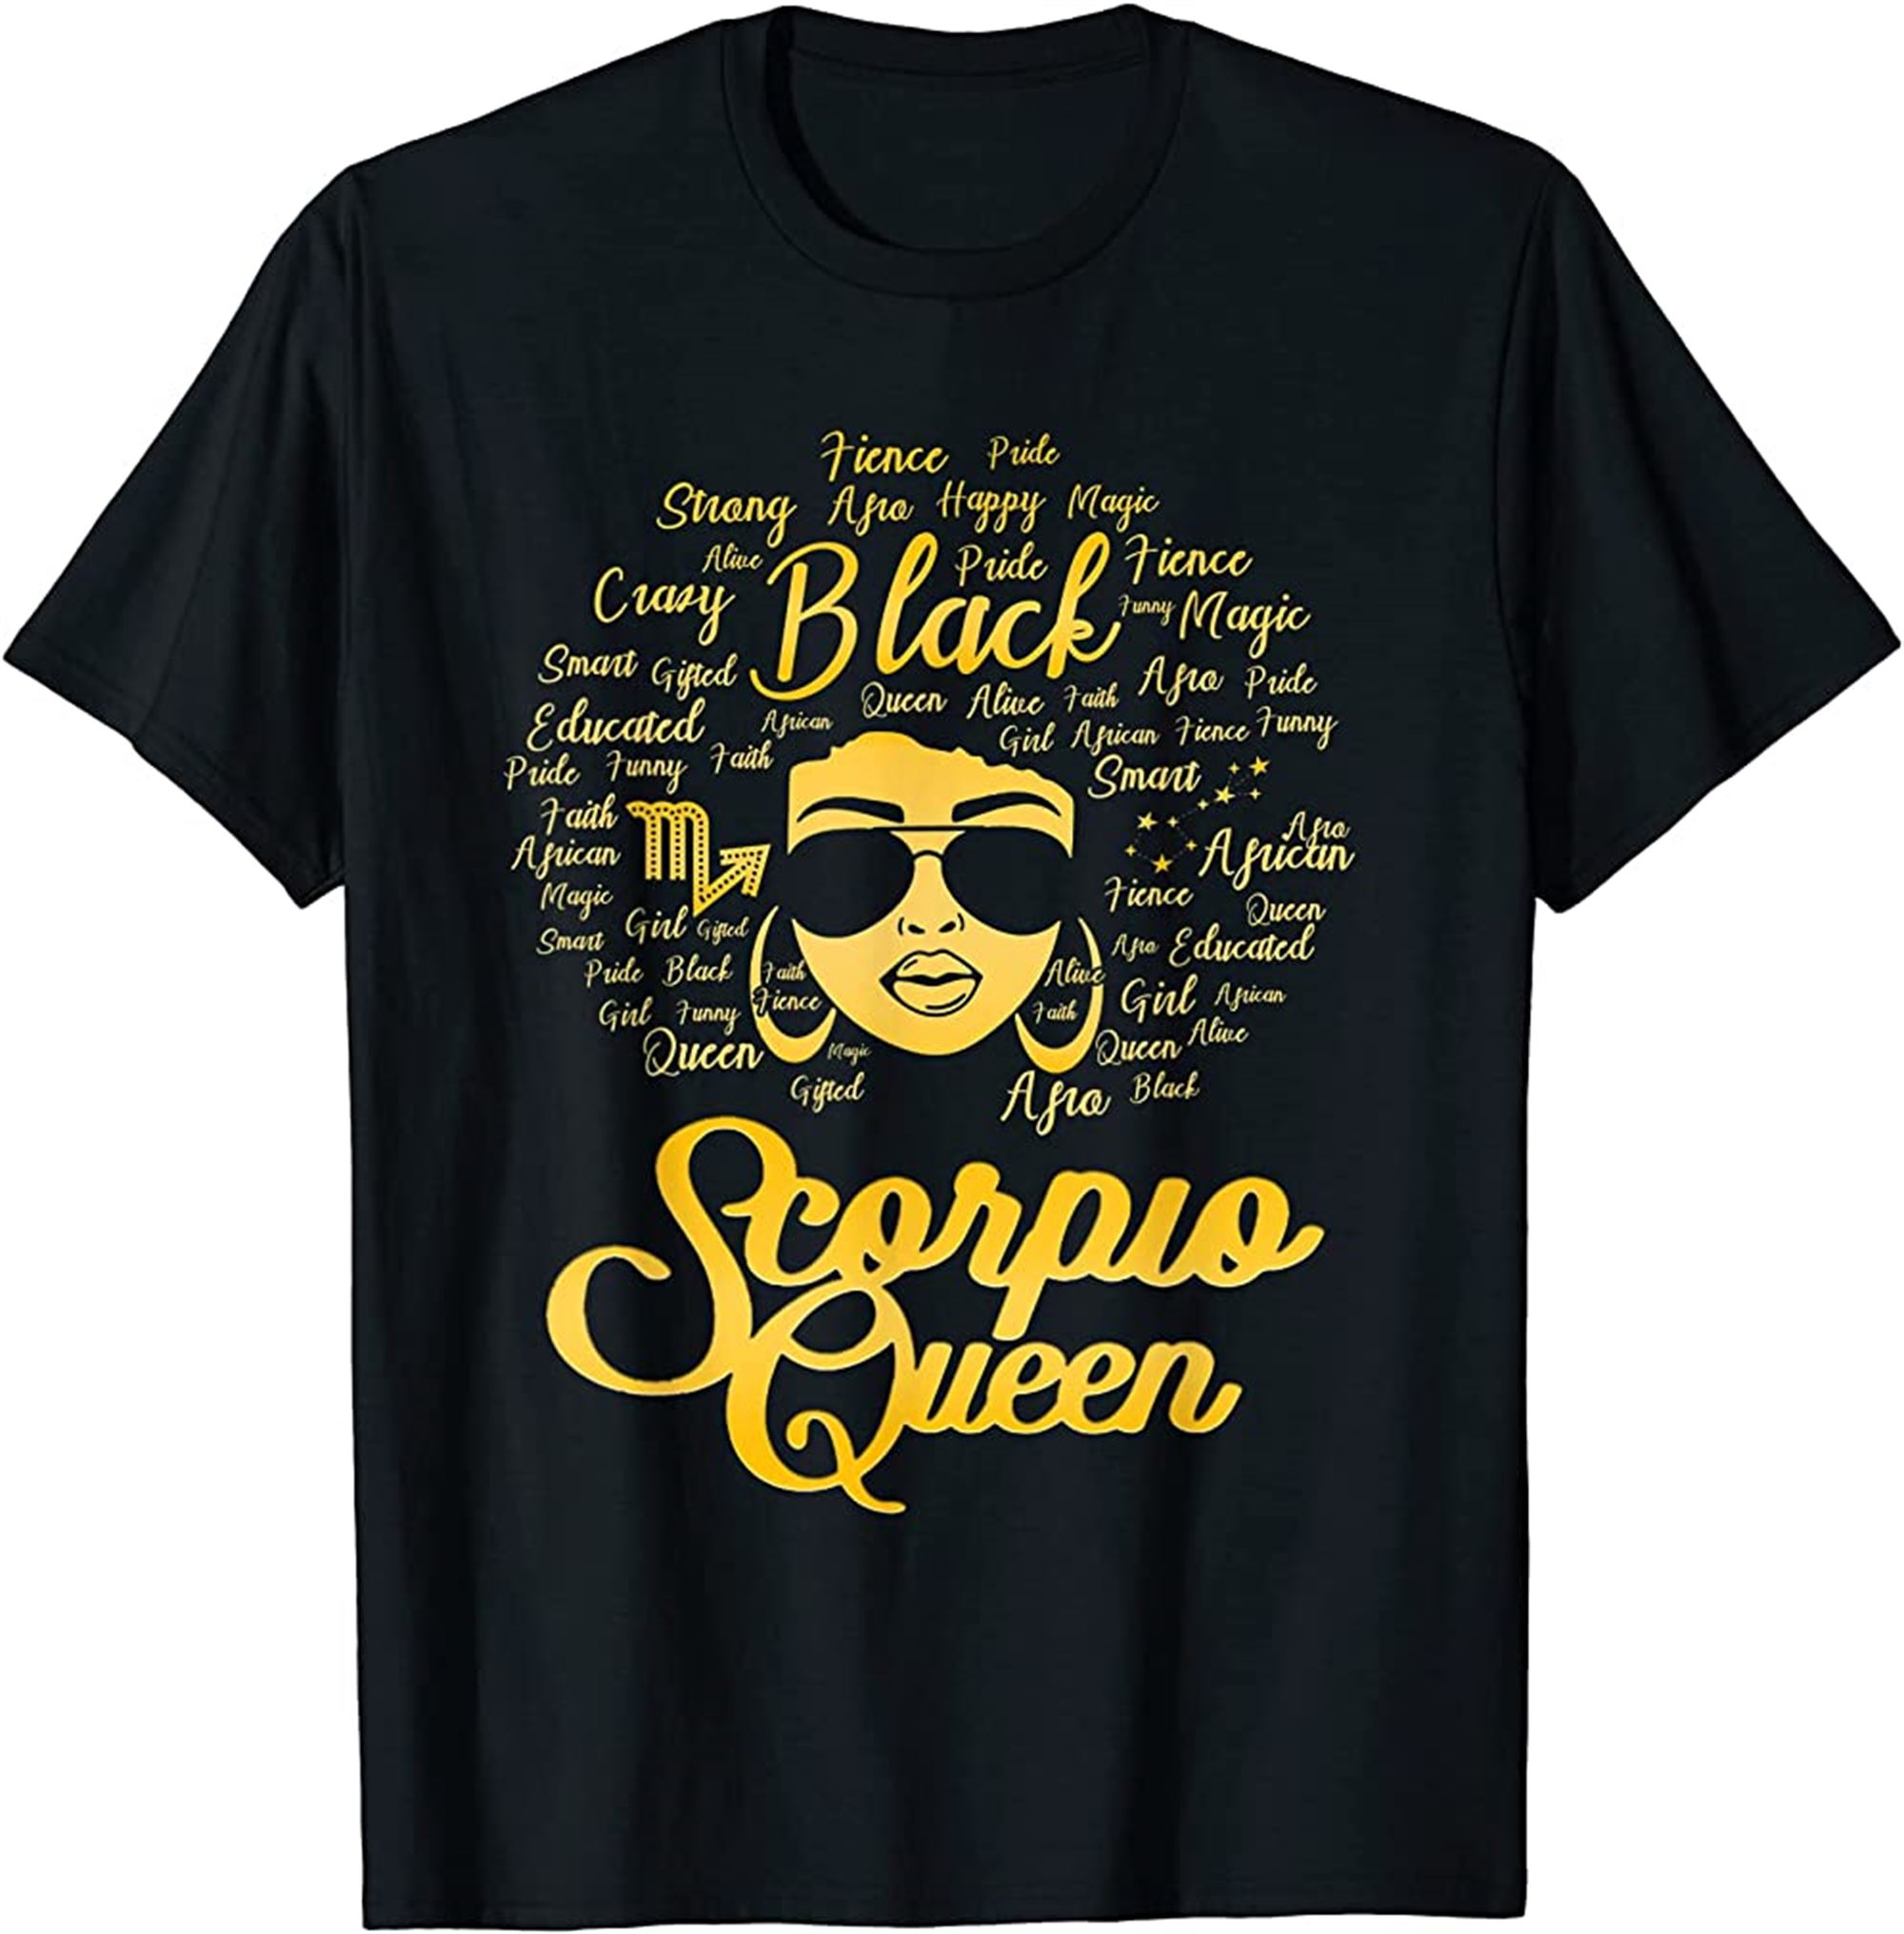 Scorpio Queen Birthday Blackwomen Zodiac Signs Afro Hair T-shirt Plus Size Up To 5xl